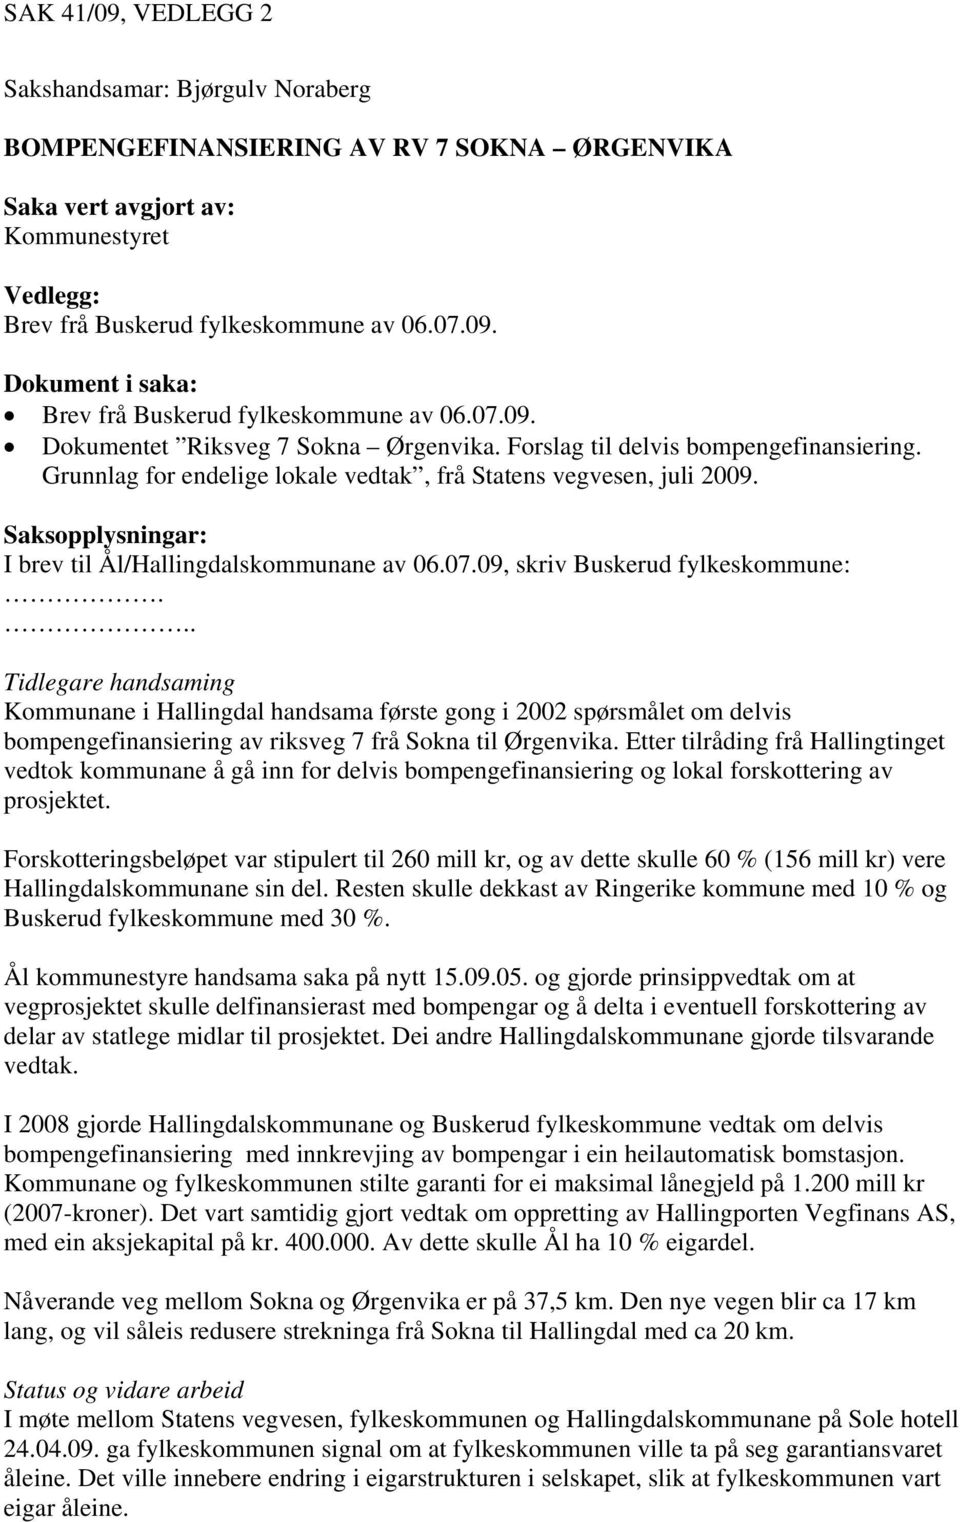 Saksopplysningar: I brev til Ål/Hallingdalskommunane av 06.07.09, skriv Buskerud fylkeskommune:.